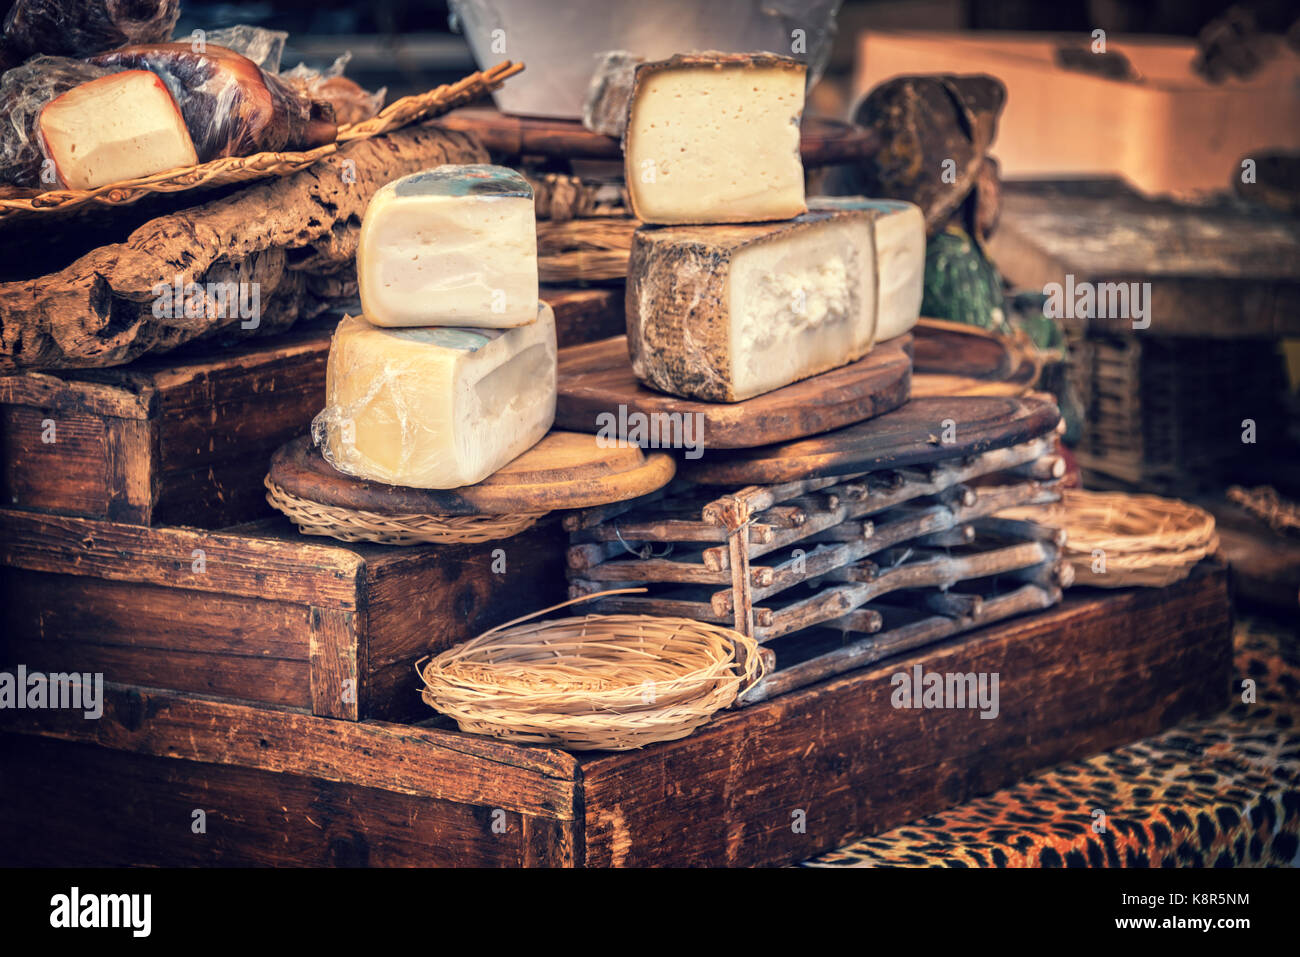 Italian pecorino cheese on a wooden rustic display Stock Photo